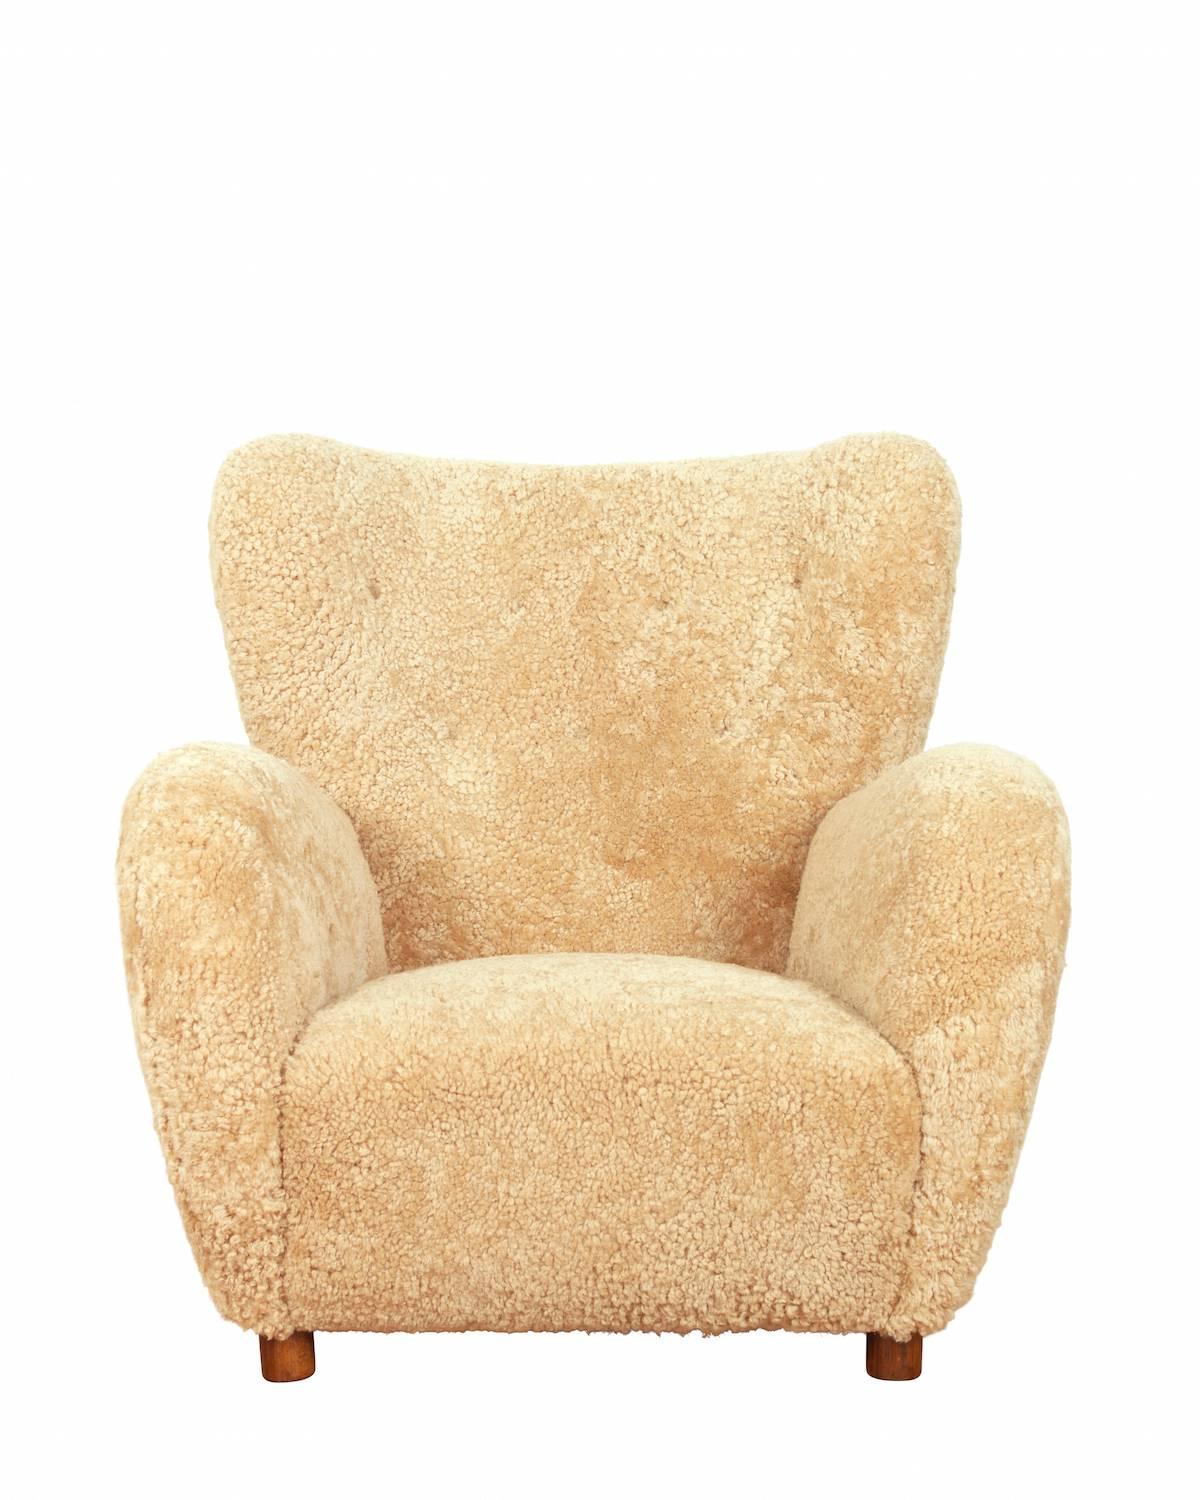 High back easy chair upholstered in brown sheepskin, raised on legs of beech.